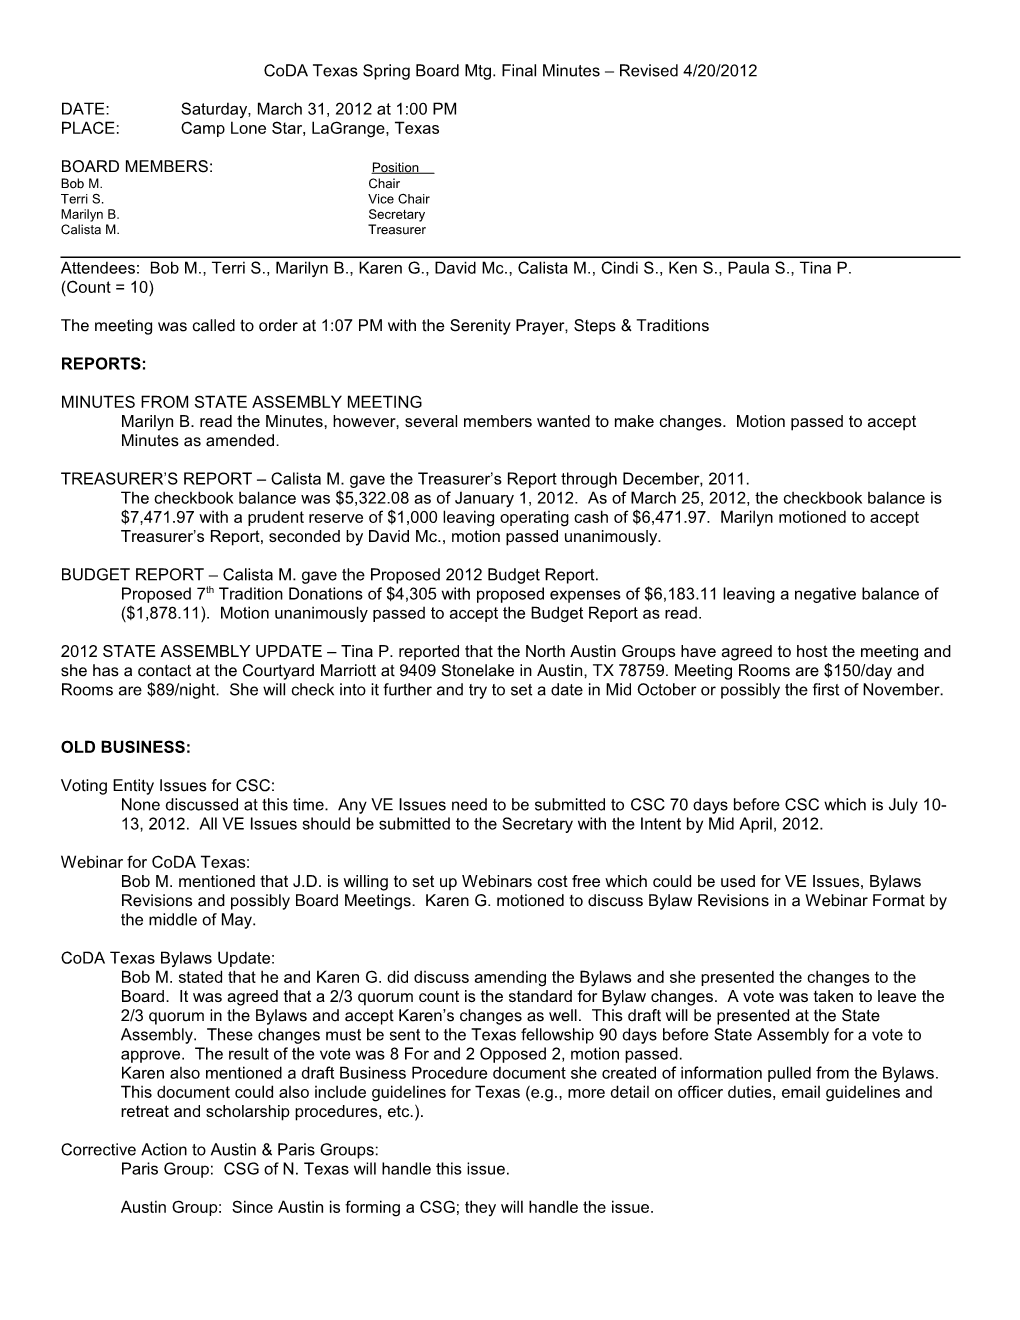 Coda Texas Spring Board Mtg. Final Minutes Revised 4/20/2012